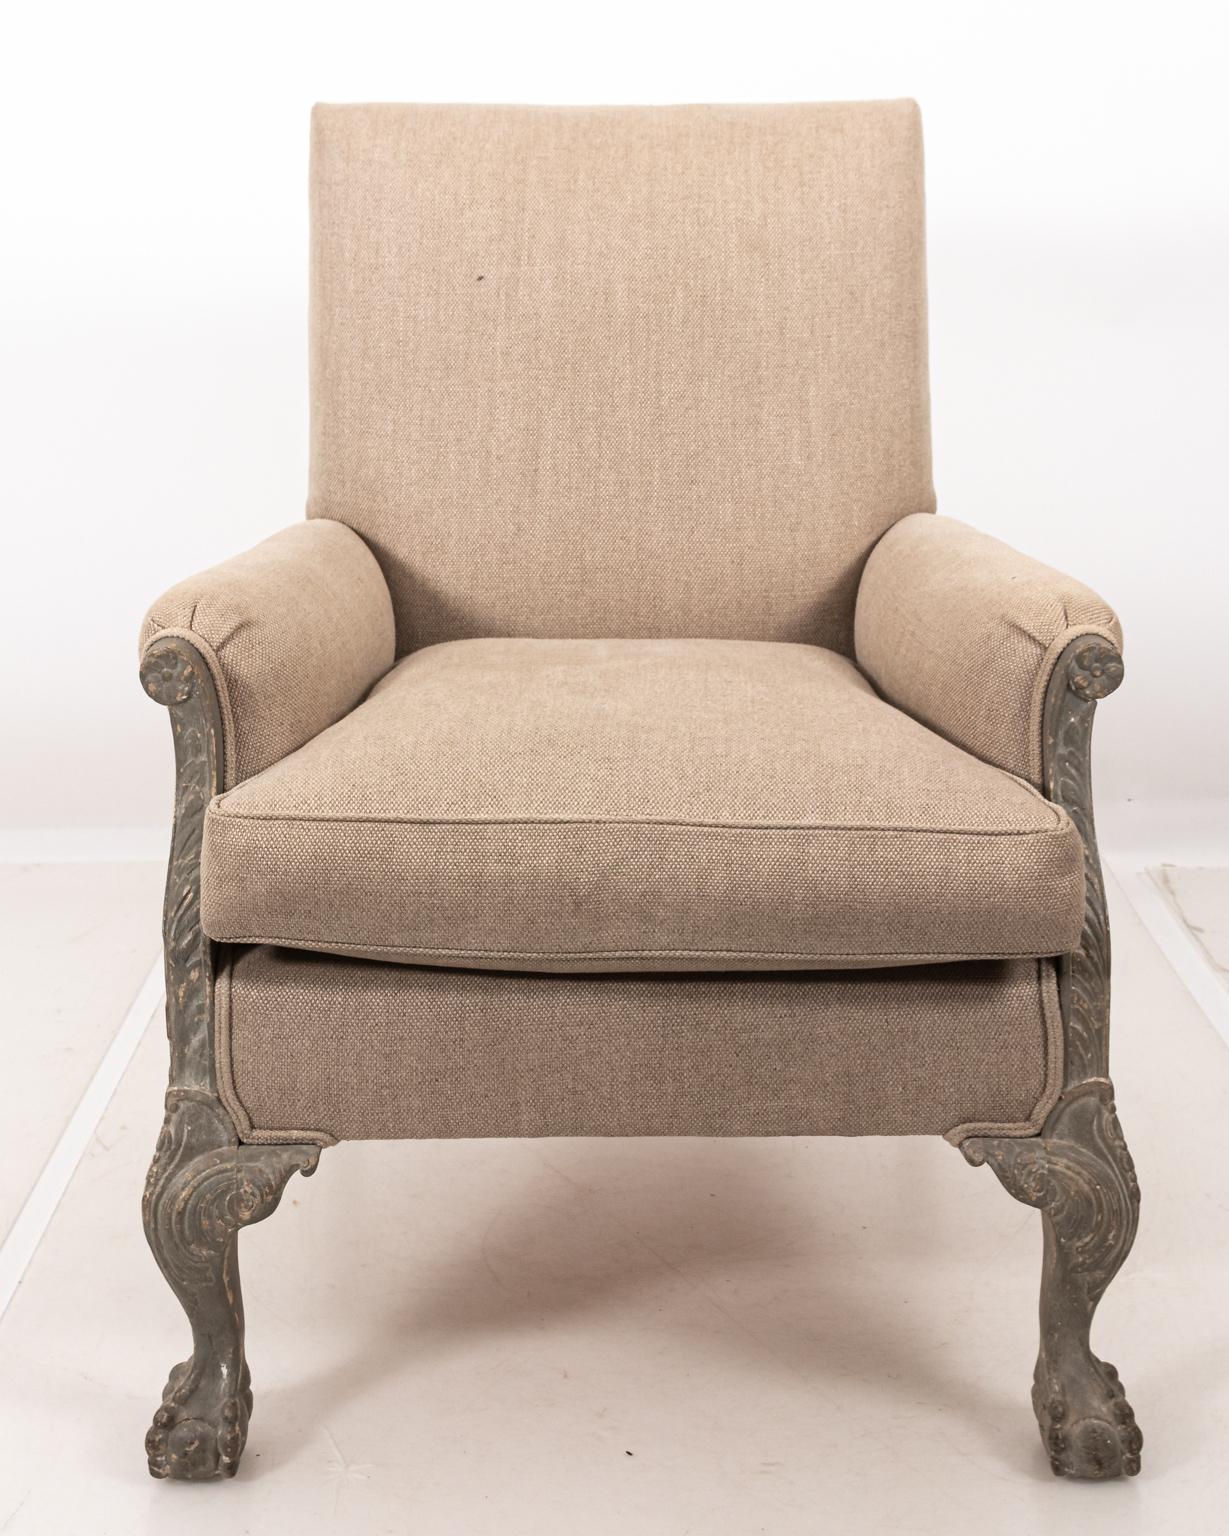 Linen Upholstered Victorian Armchair, circa 1850s